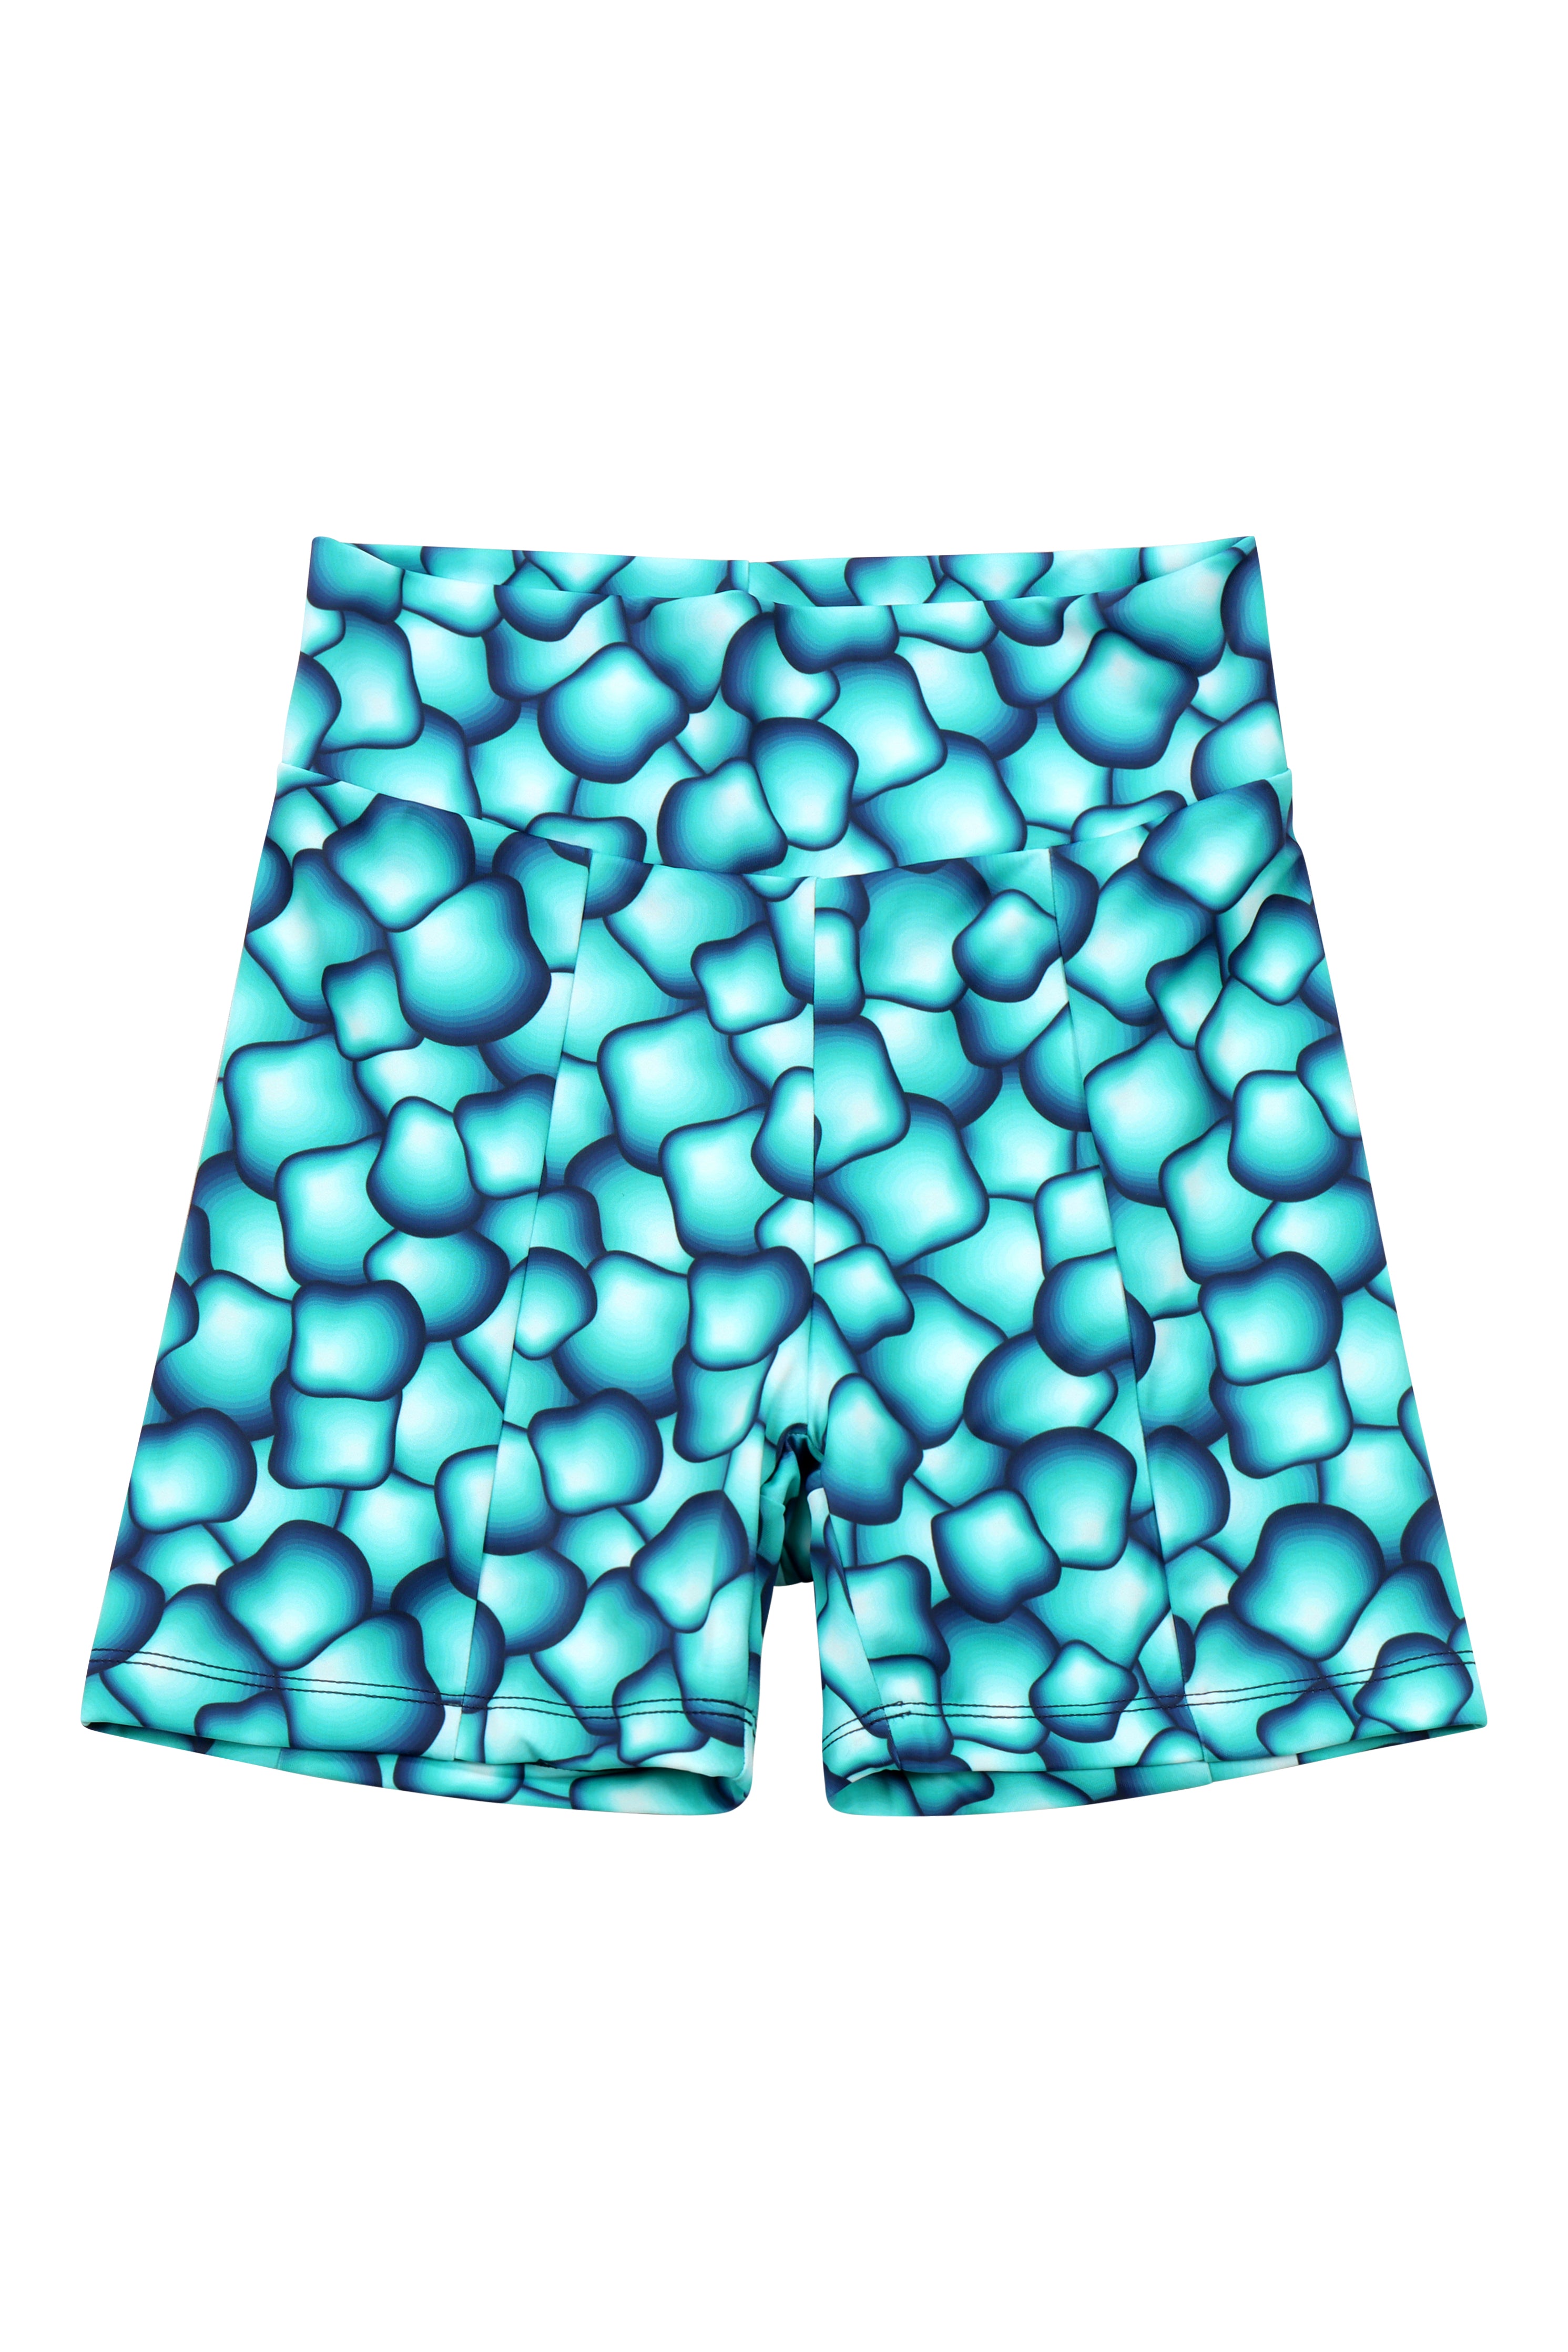 JOHNNY Swim Shorts in New Retro Print